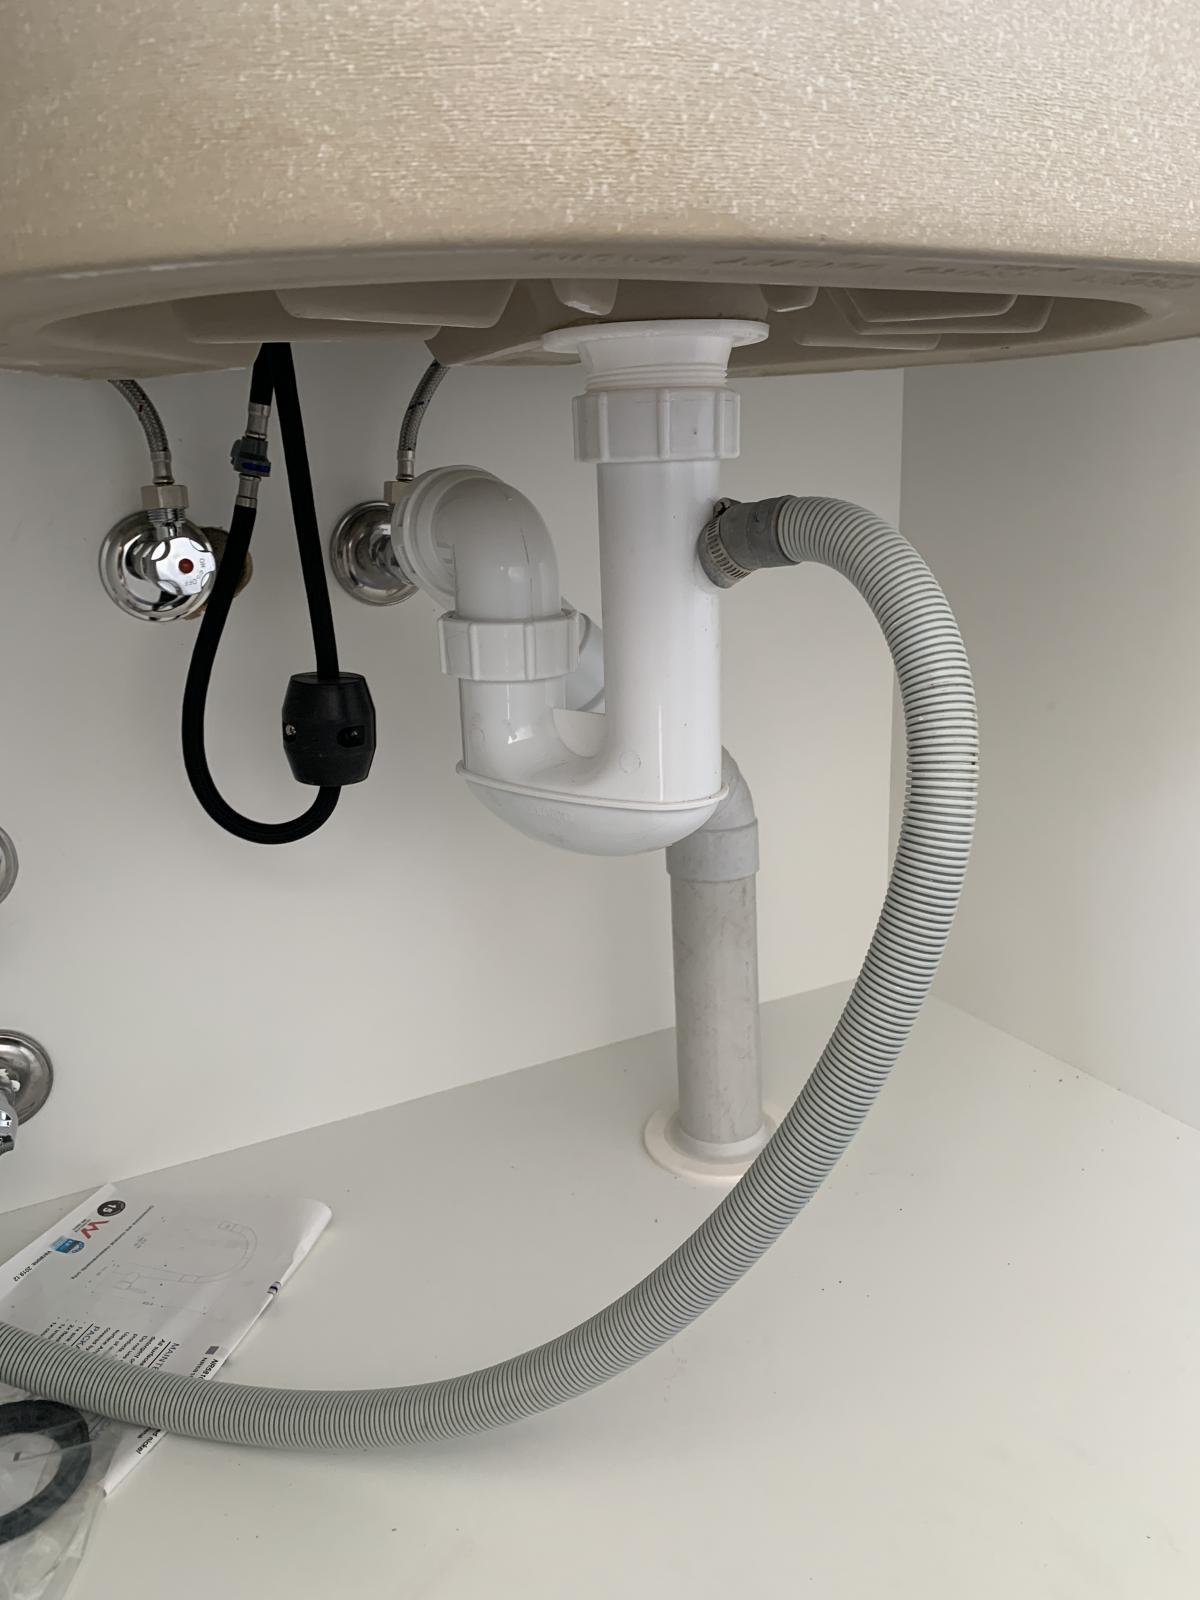 Bathroom sink trap washing machine hose provision/bypass nee